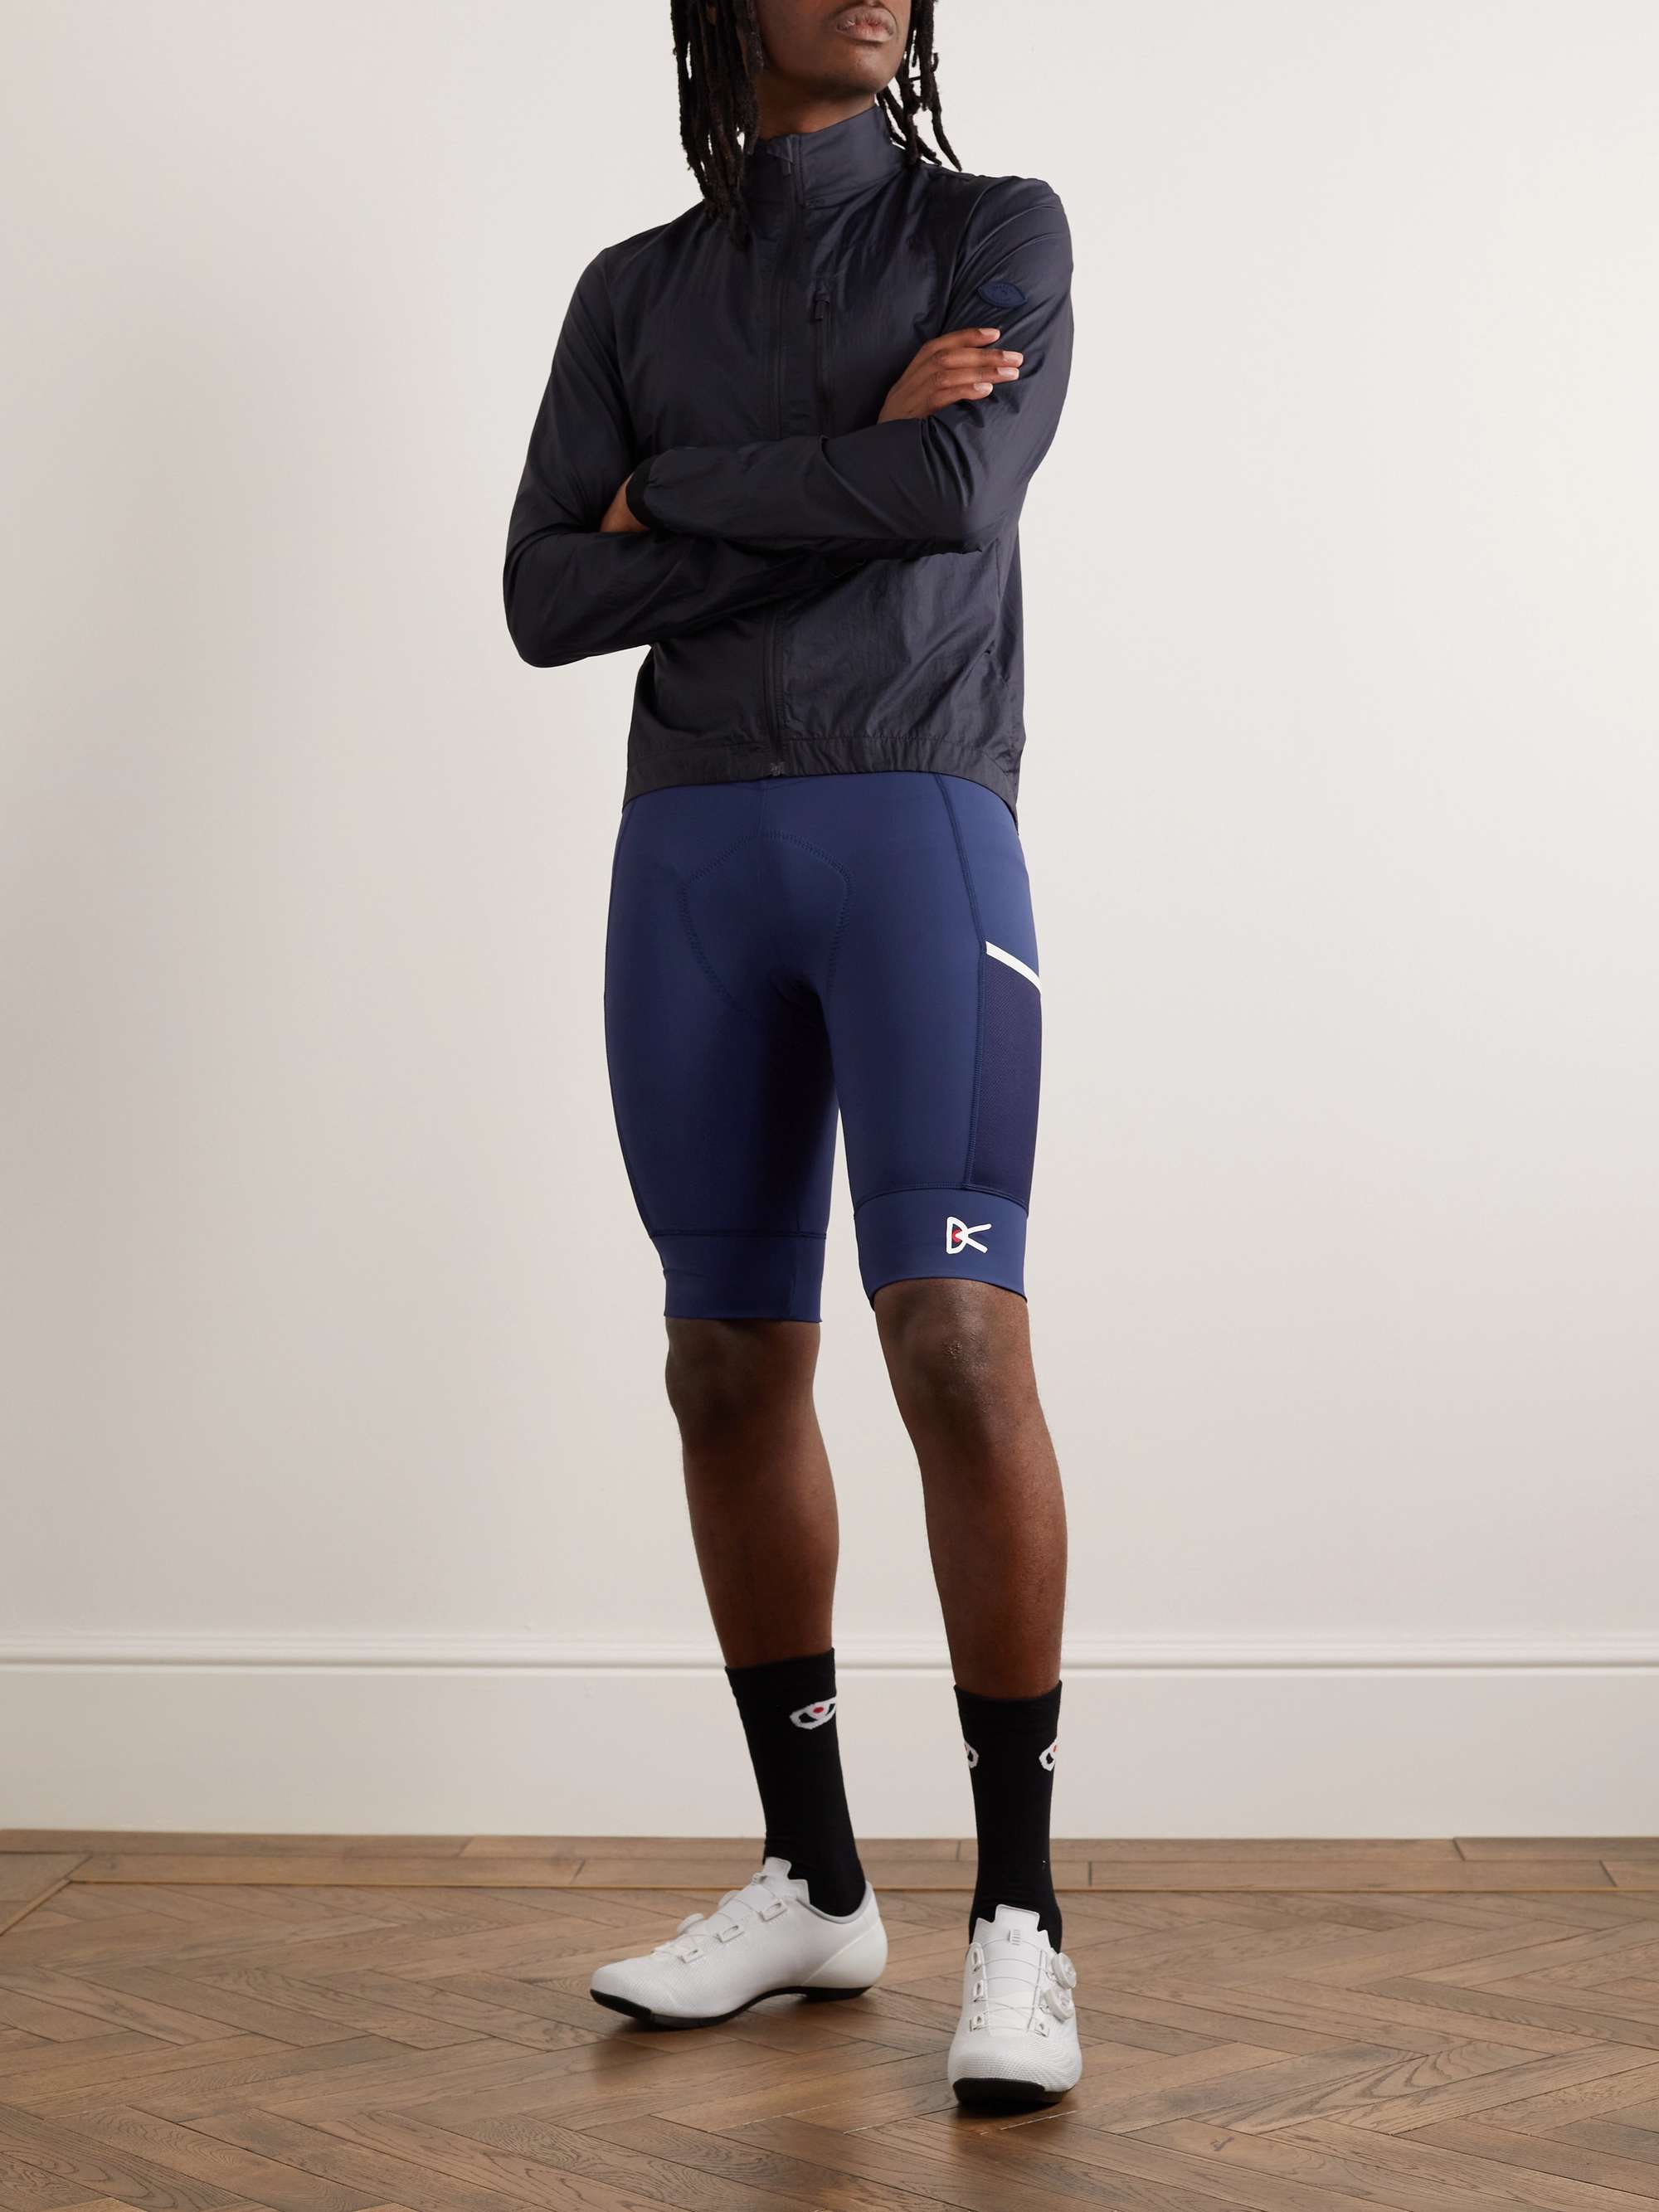 DISTRICT VISION Stretch Recycled-Nylon Cycling Bib Shorts for Men | MR ...